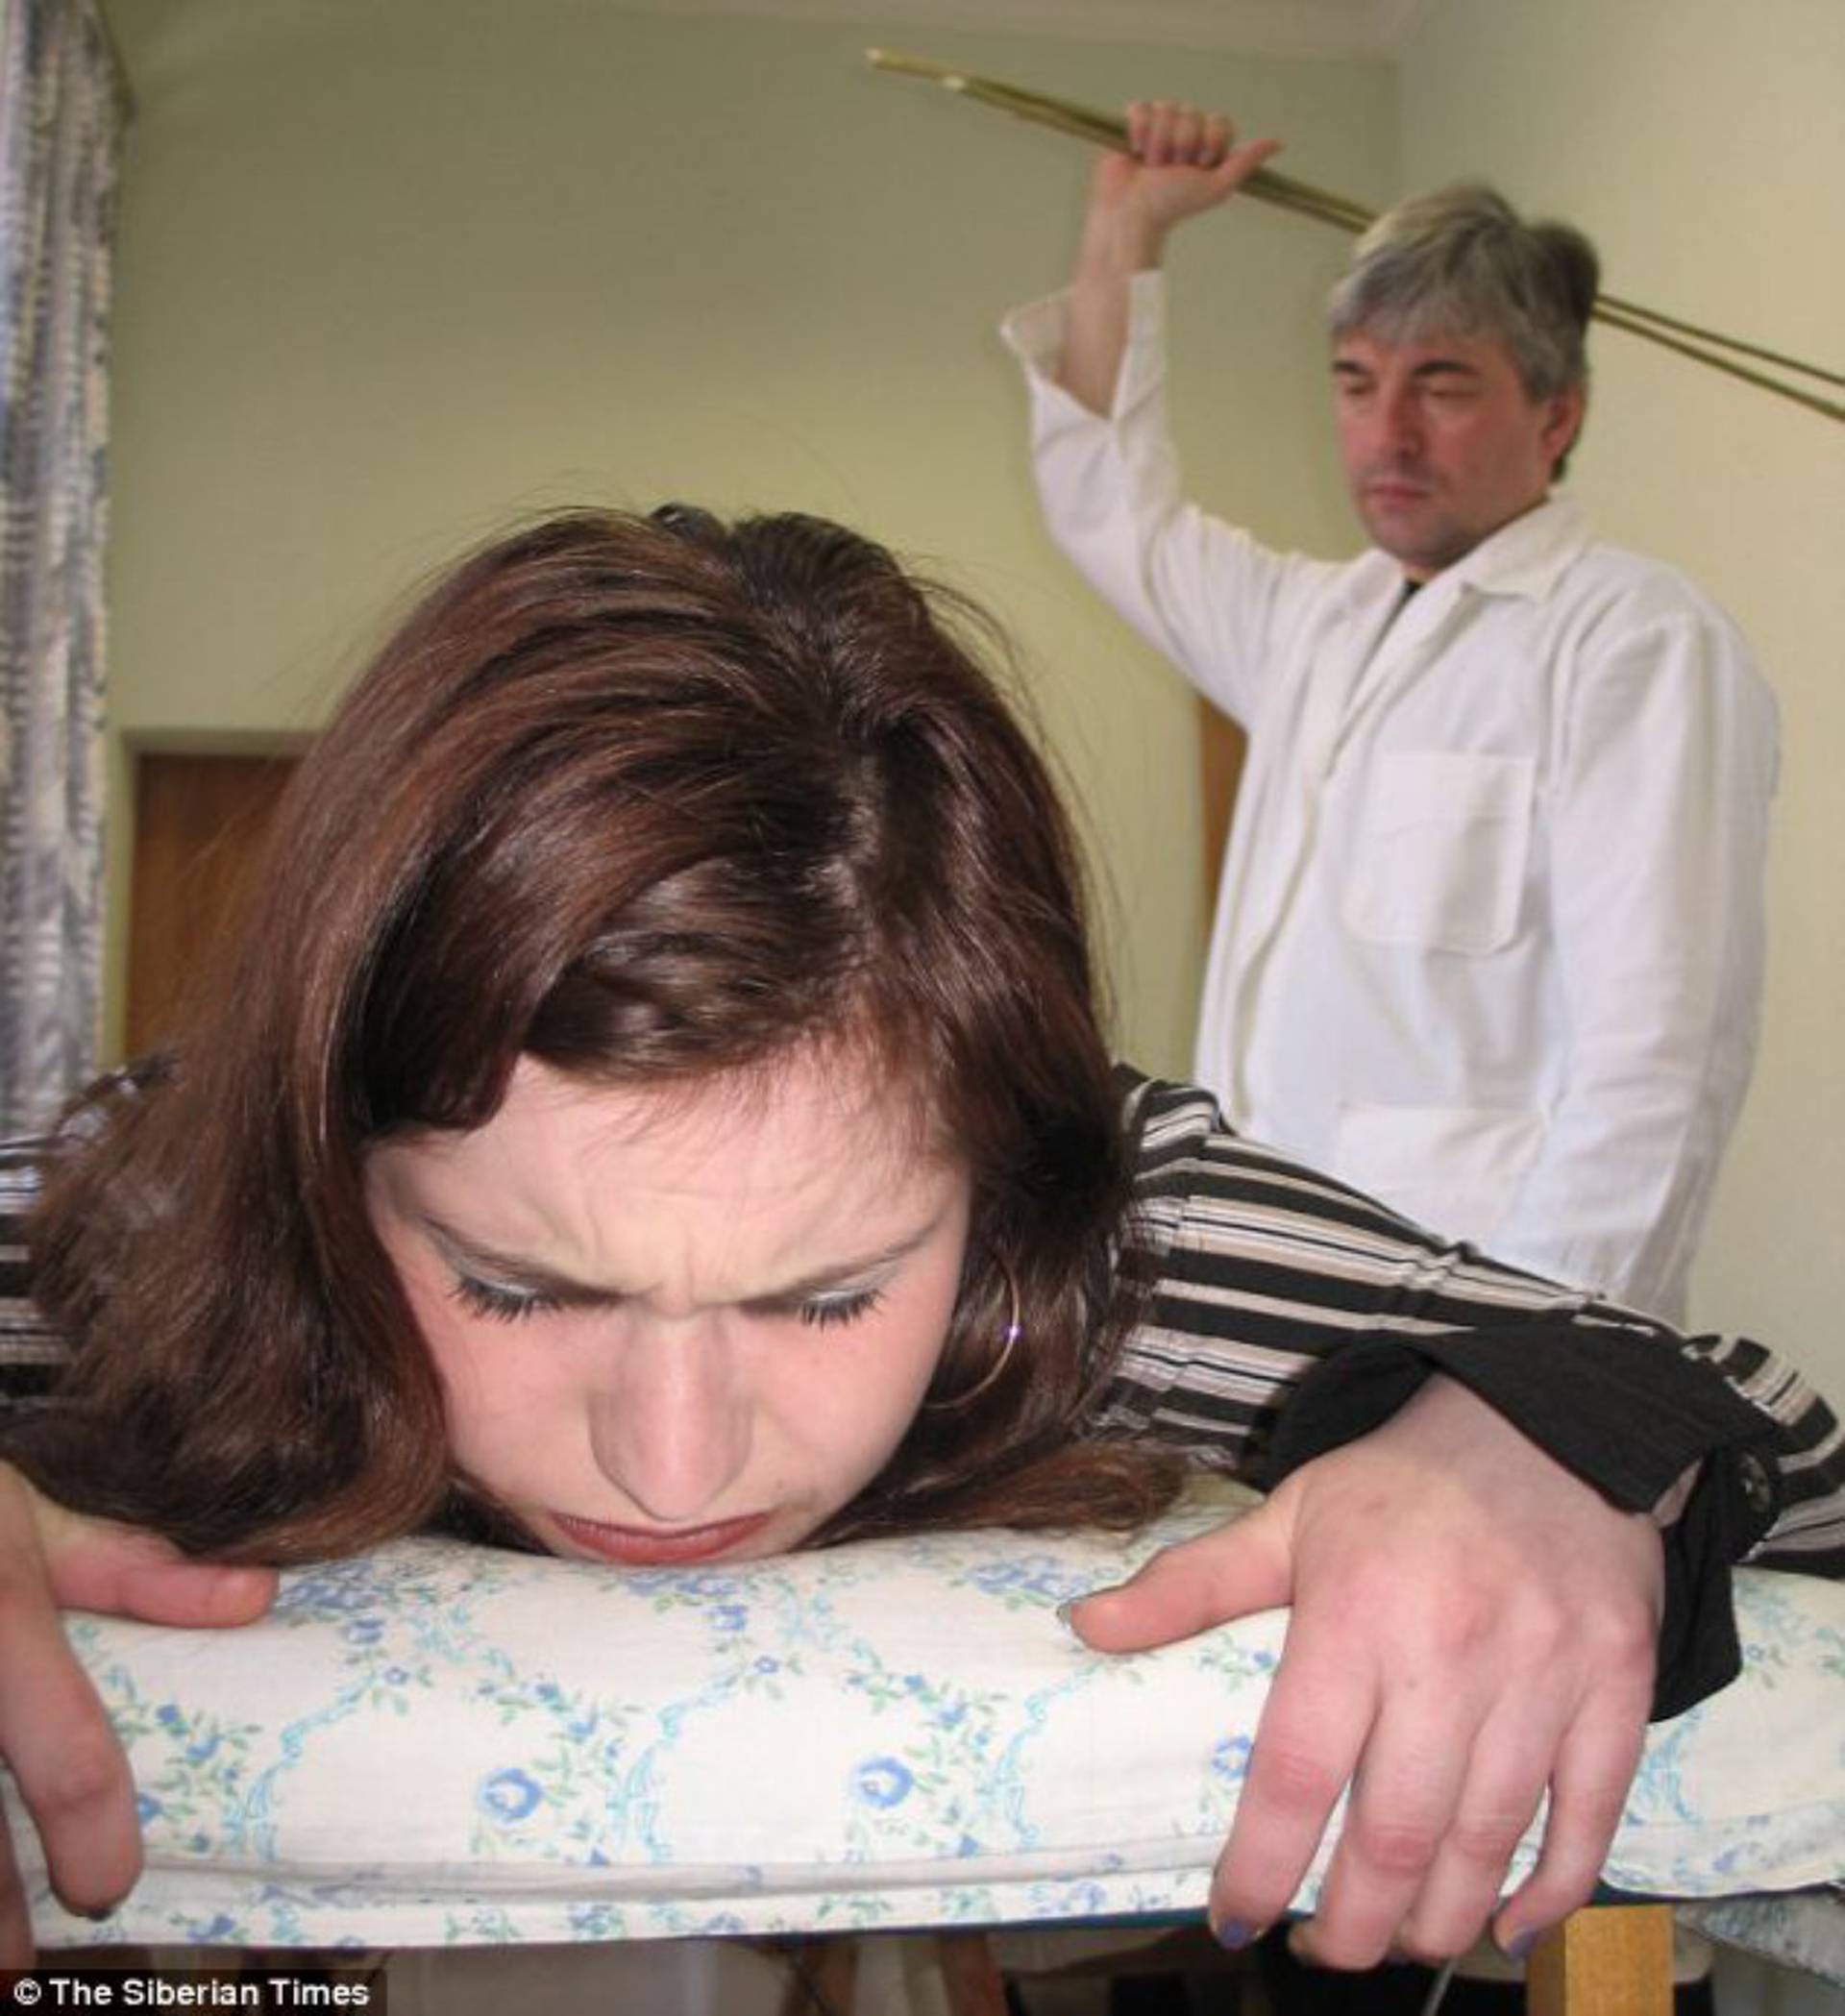 Wife punished